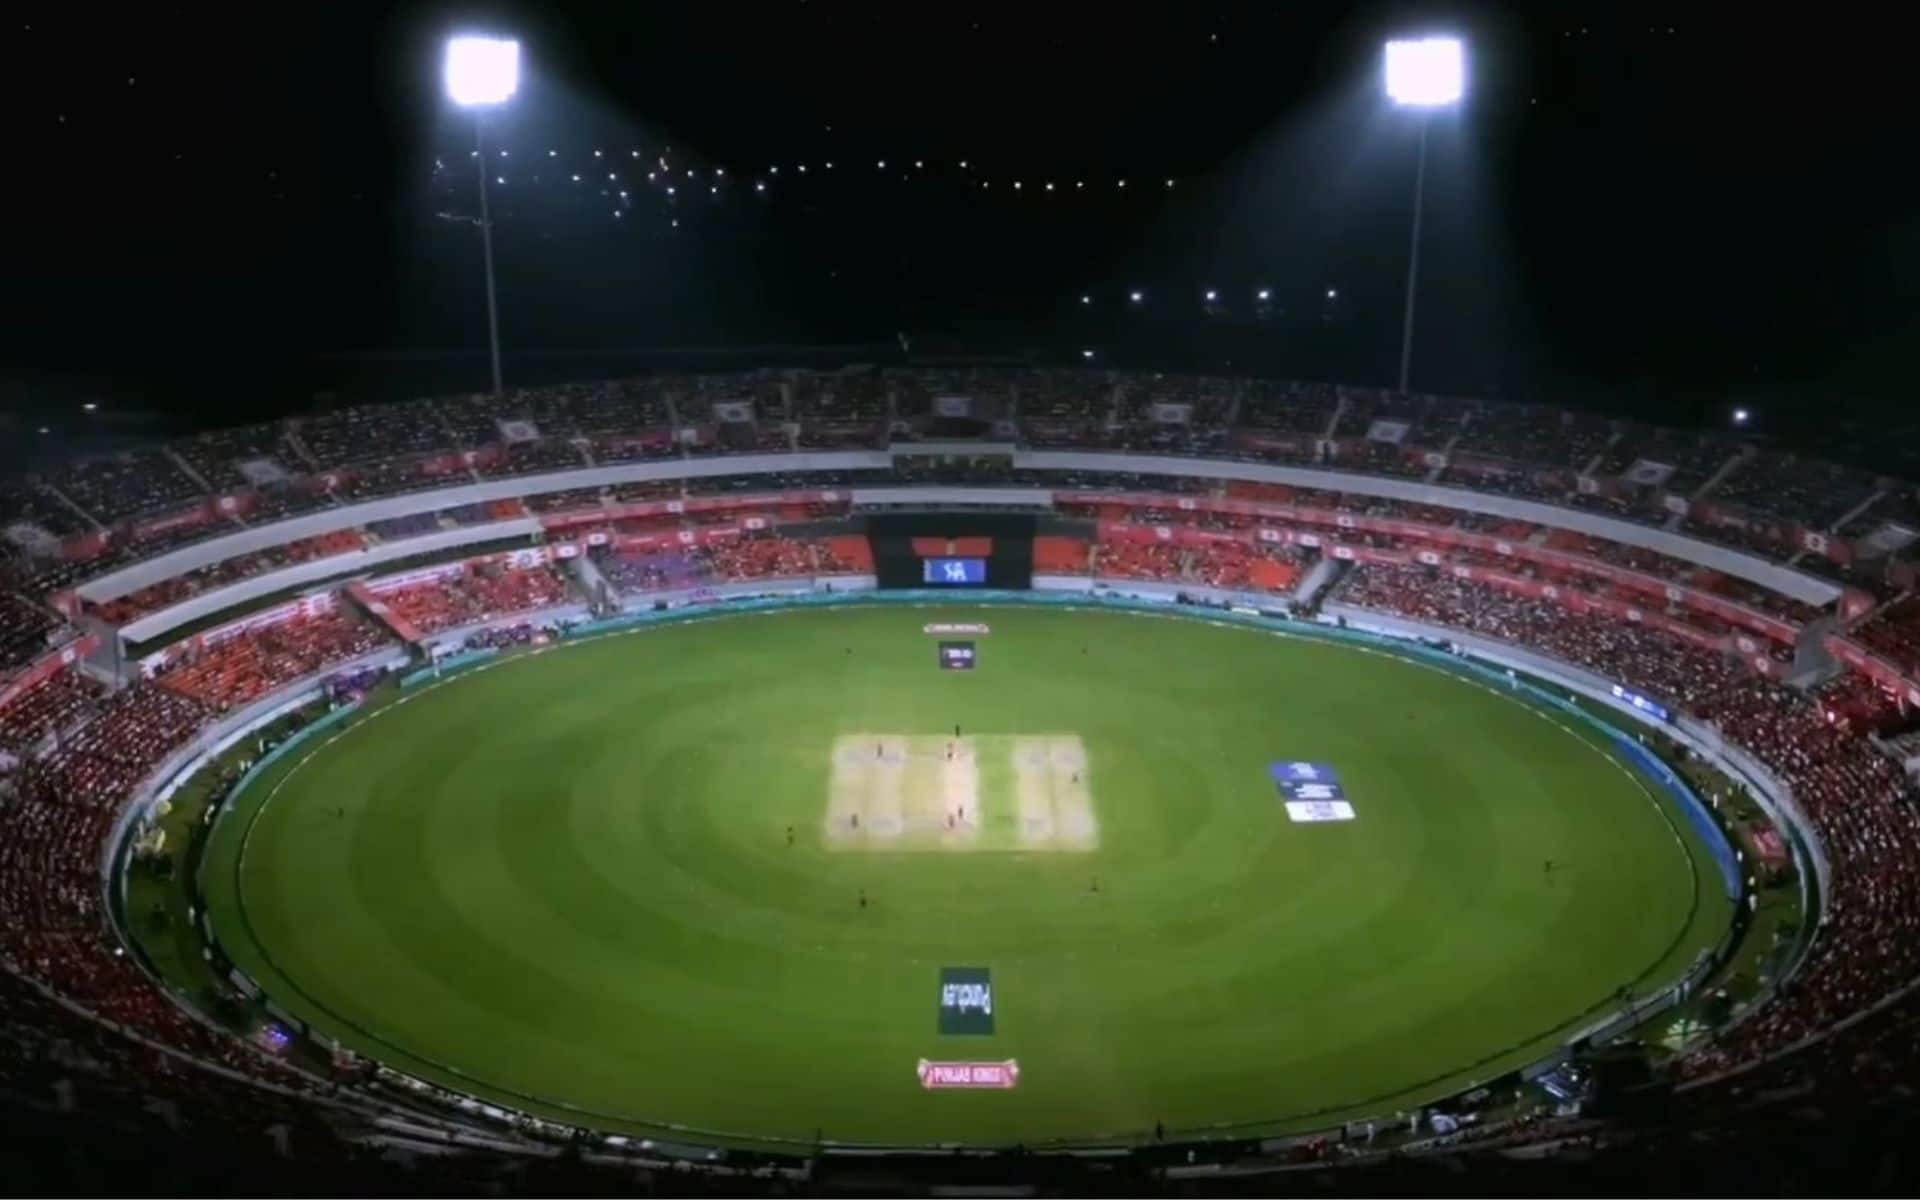 Mullanpur Cricket Stadium [x.com]